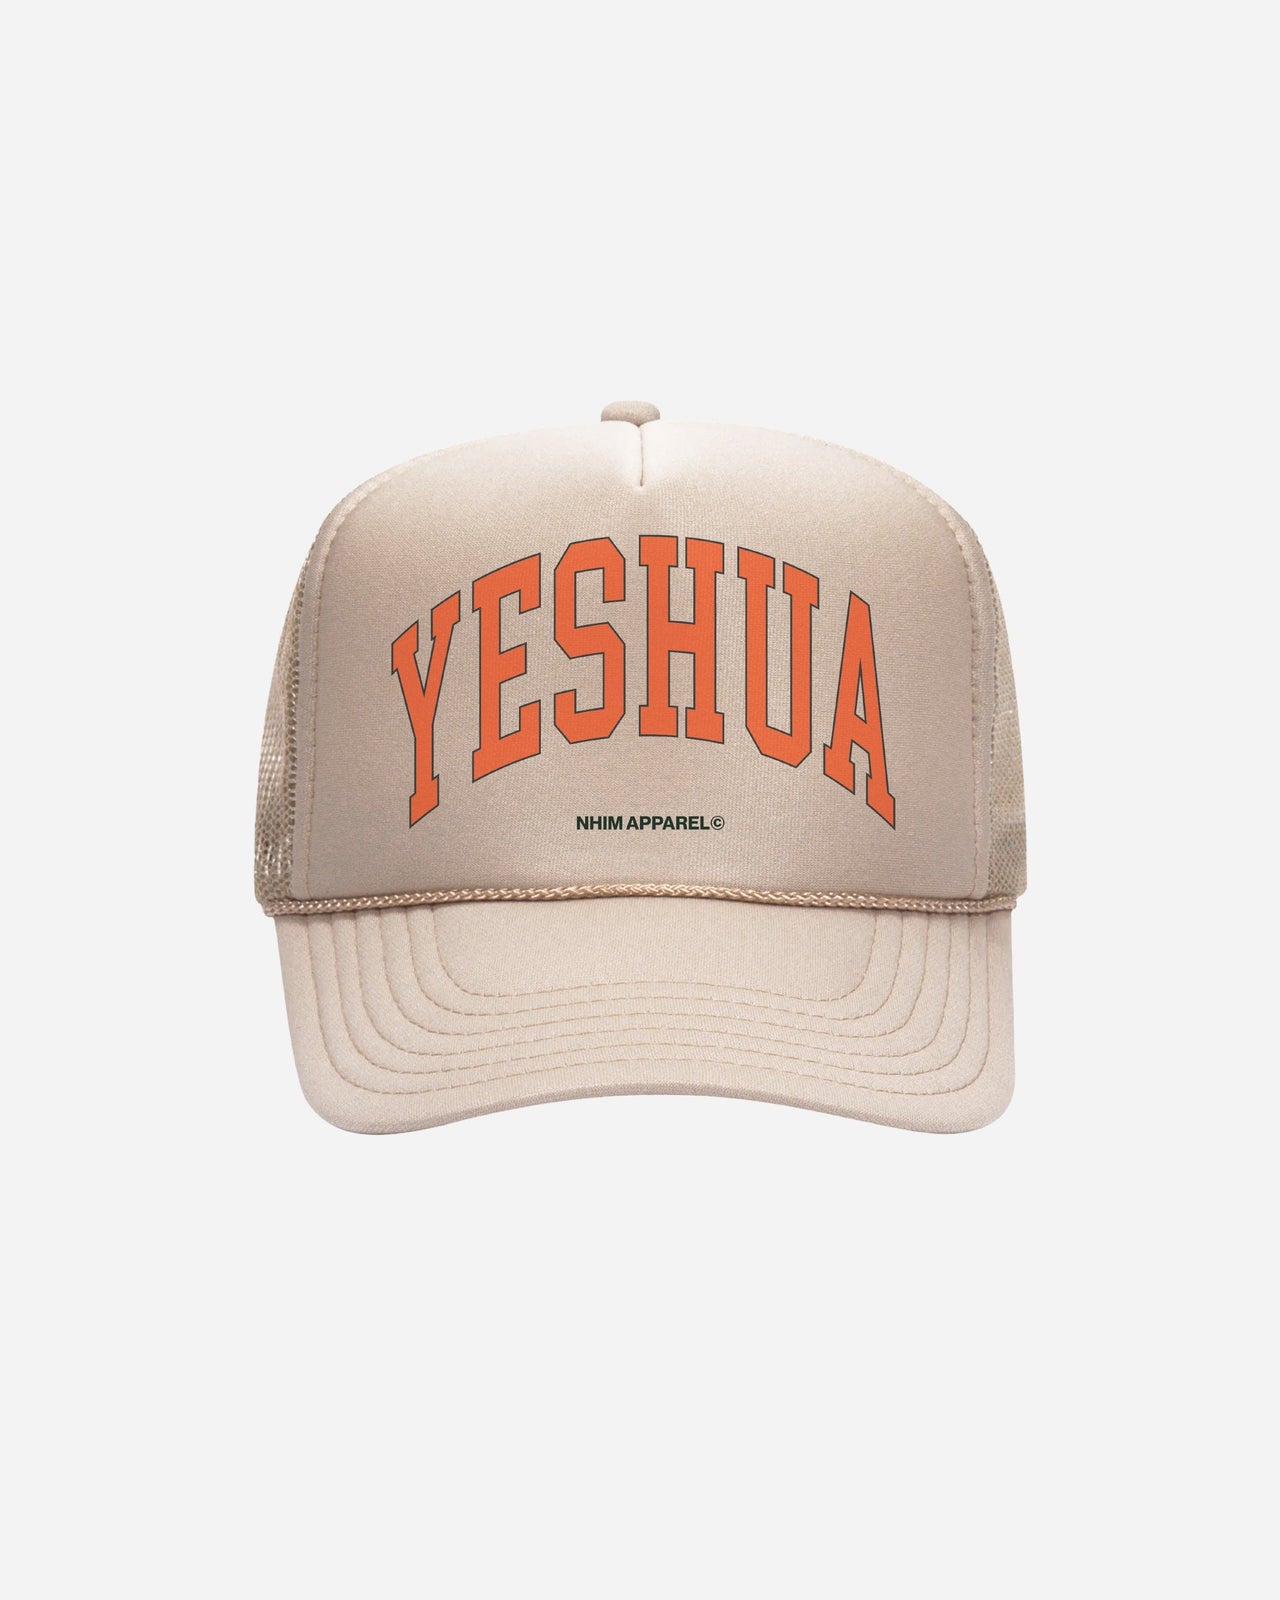 YESHUA Christian trucker hat from NHIM Apparel Christian Clothing Brand, khaki hat with orange writing